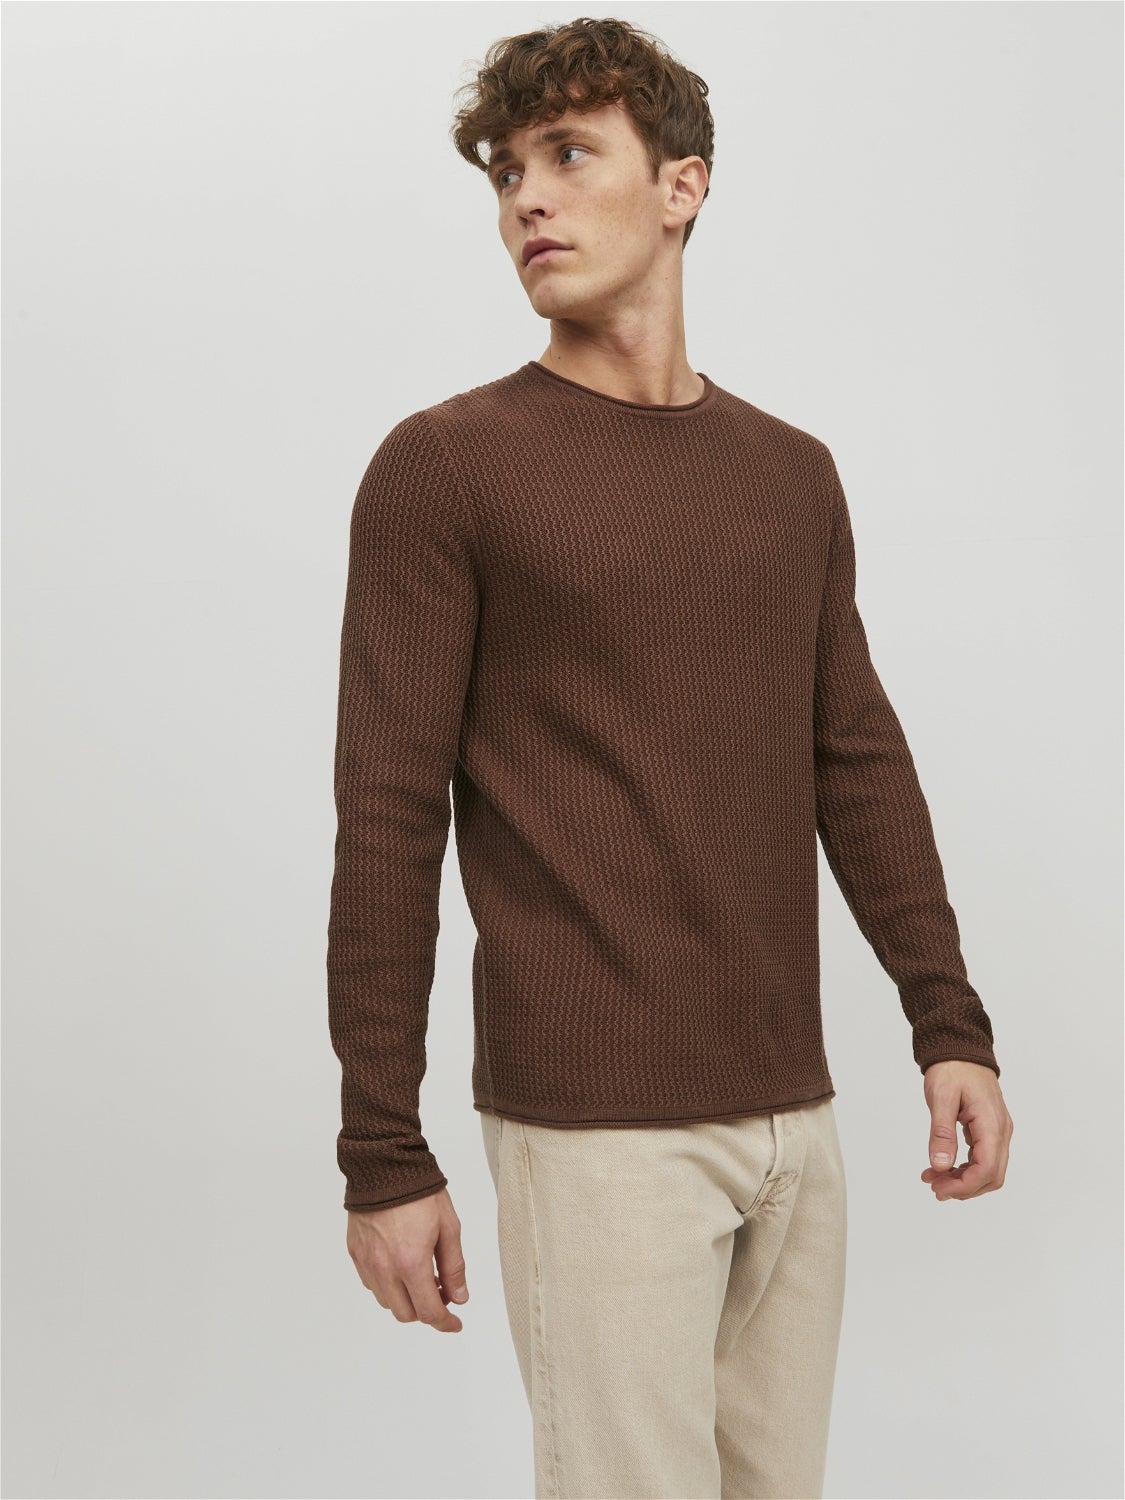 discount 63% Jack & Jones jumper Brown L MEN FASHION Jumpers & Sweatshirts Elegant 